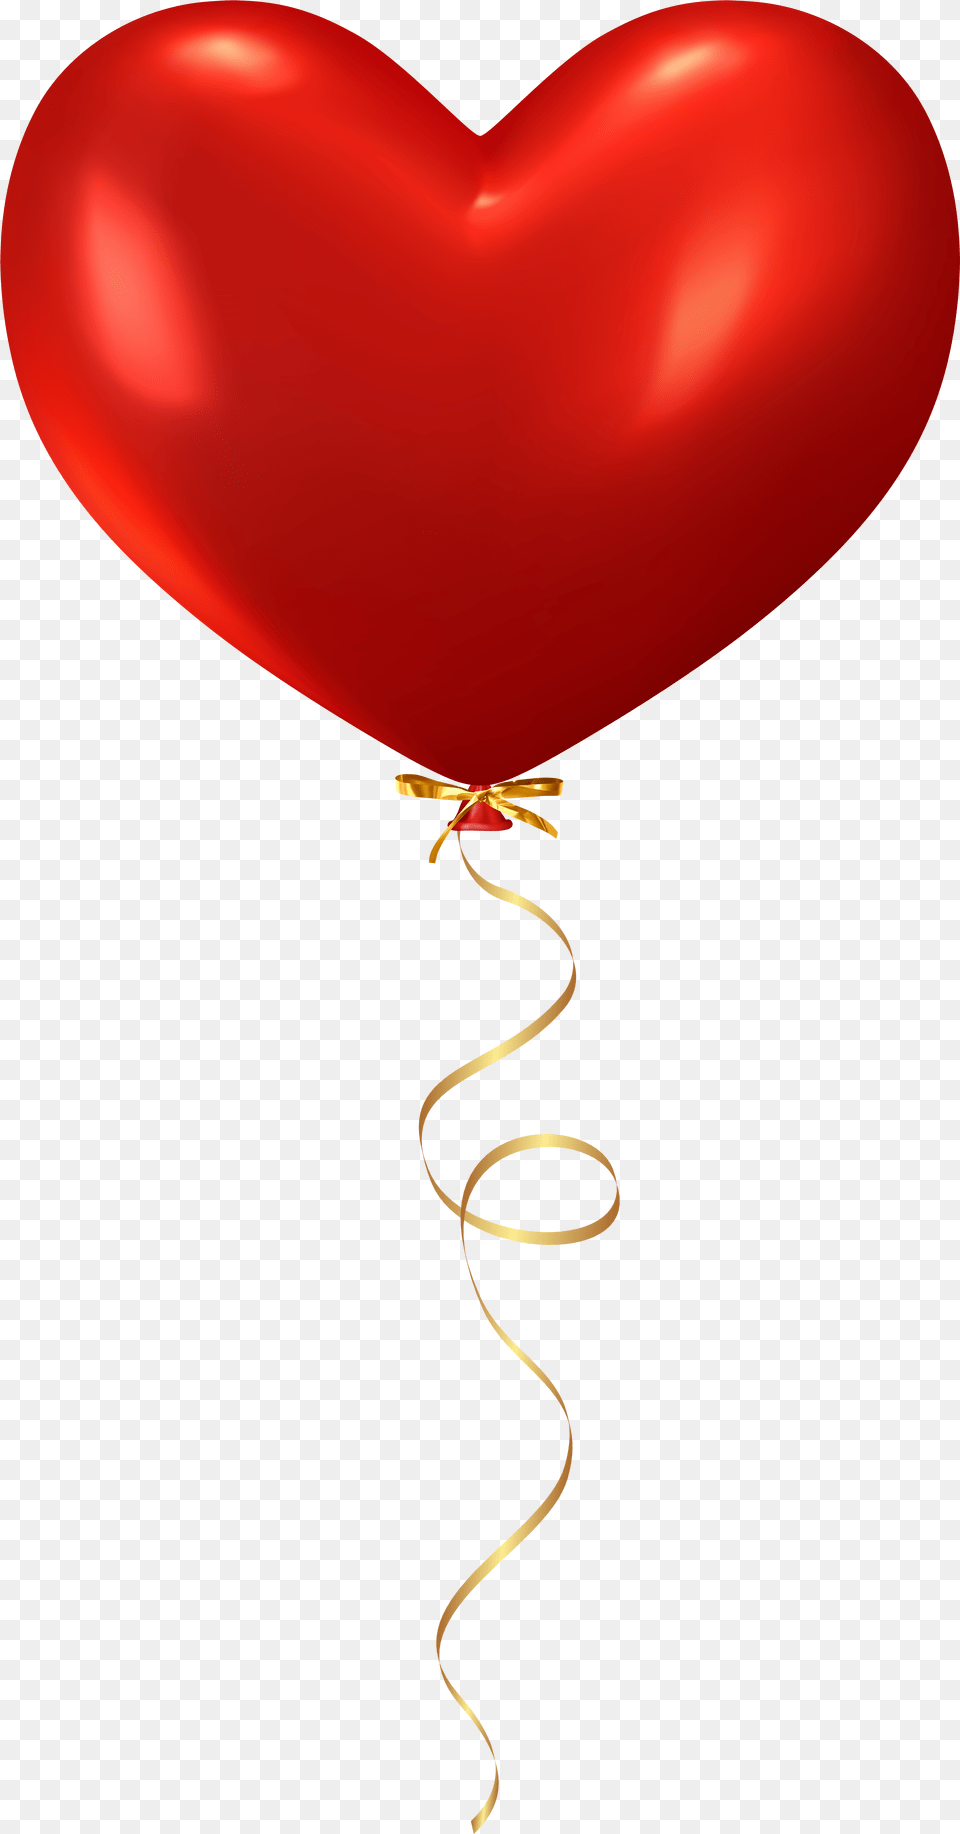 Heart Shaped Balloon Balloon Free Transparent Png